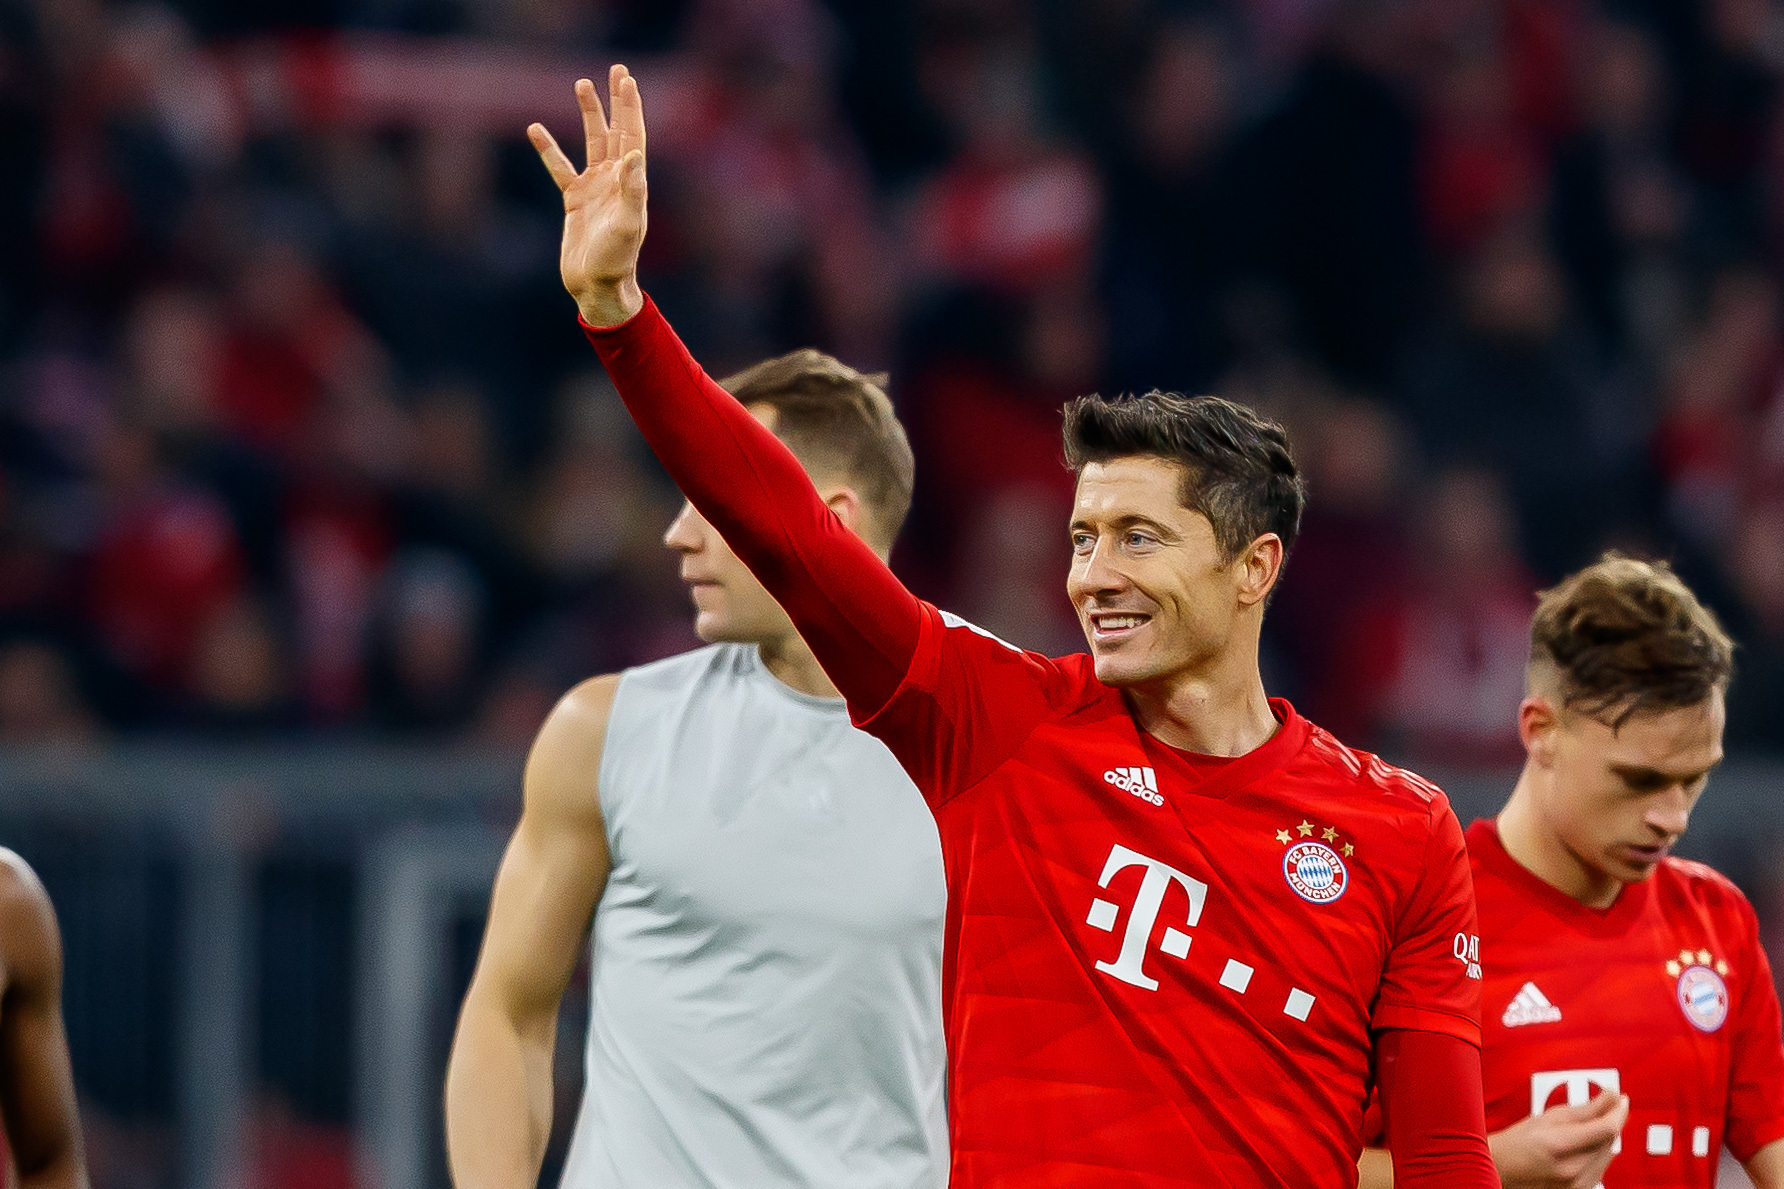 Bayern Munich S Robert Lewandowski Says His Best Is Yet To Come Bleacher Report Latest News Videos And Highlights